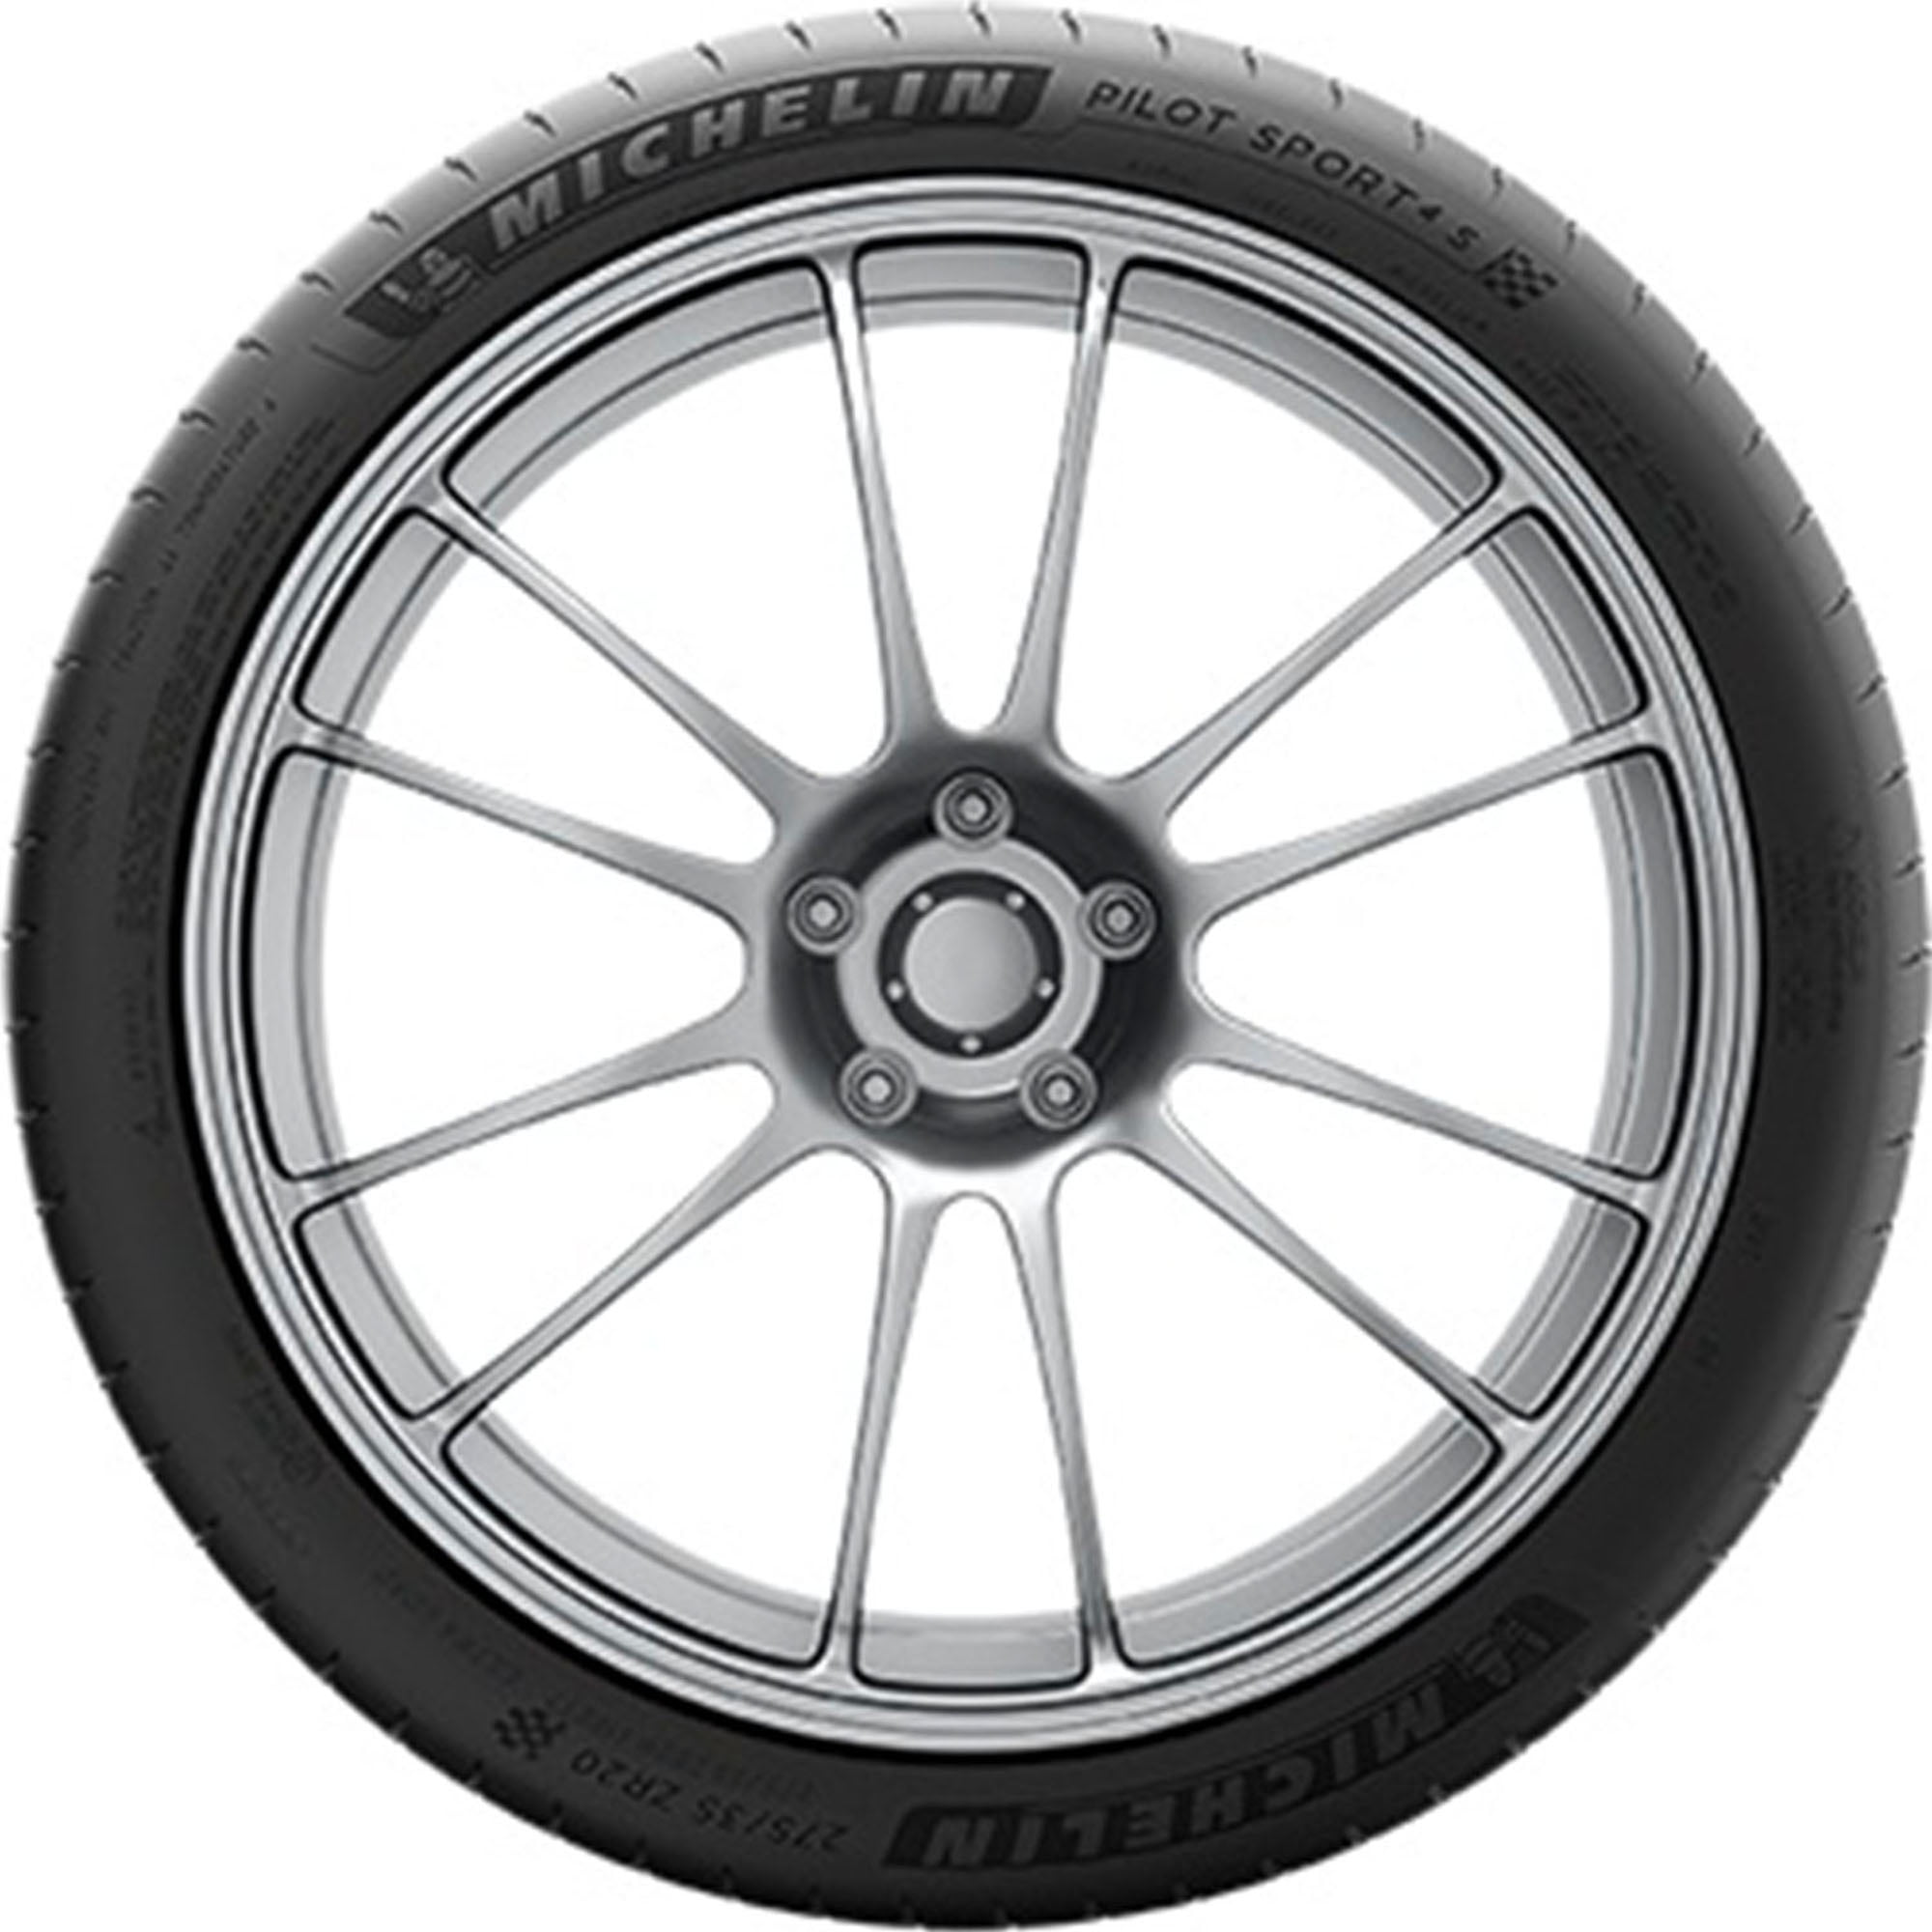 XL 4S (94Y) Passenger Michelin Tire Performance Pilot 225/45ZR17 Sport